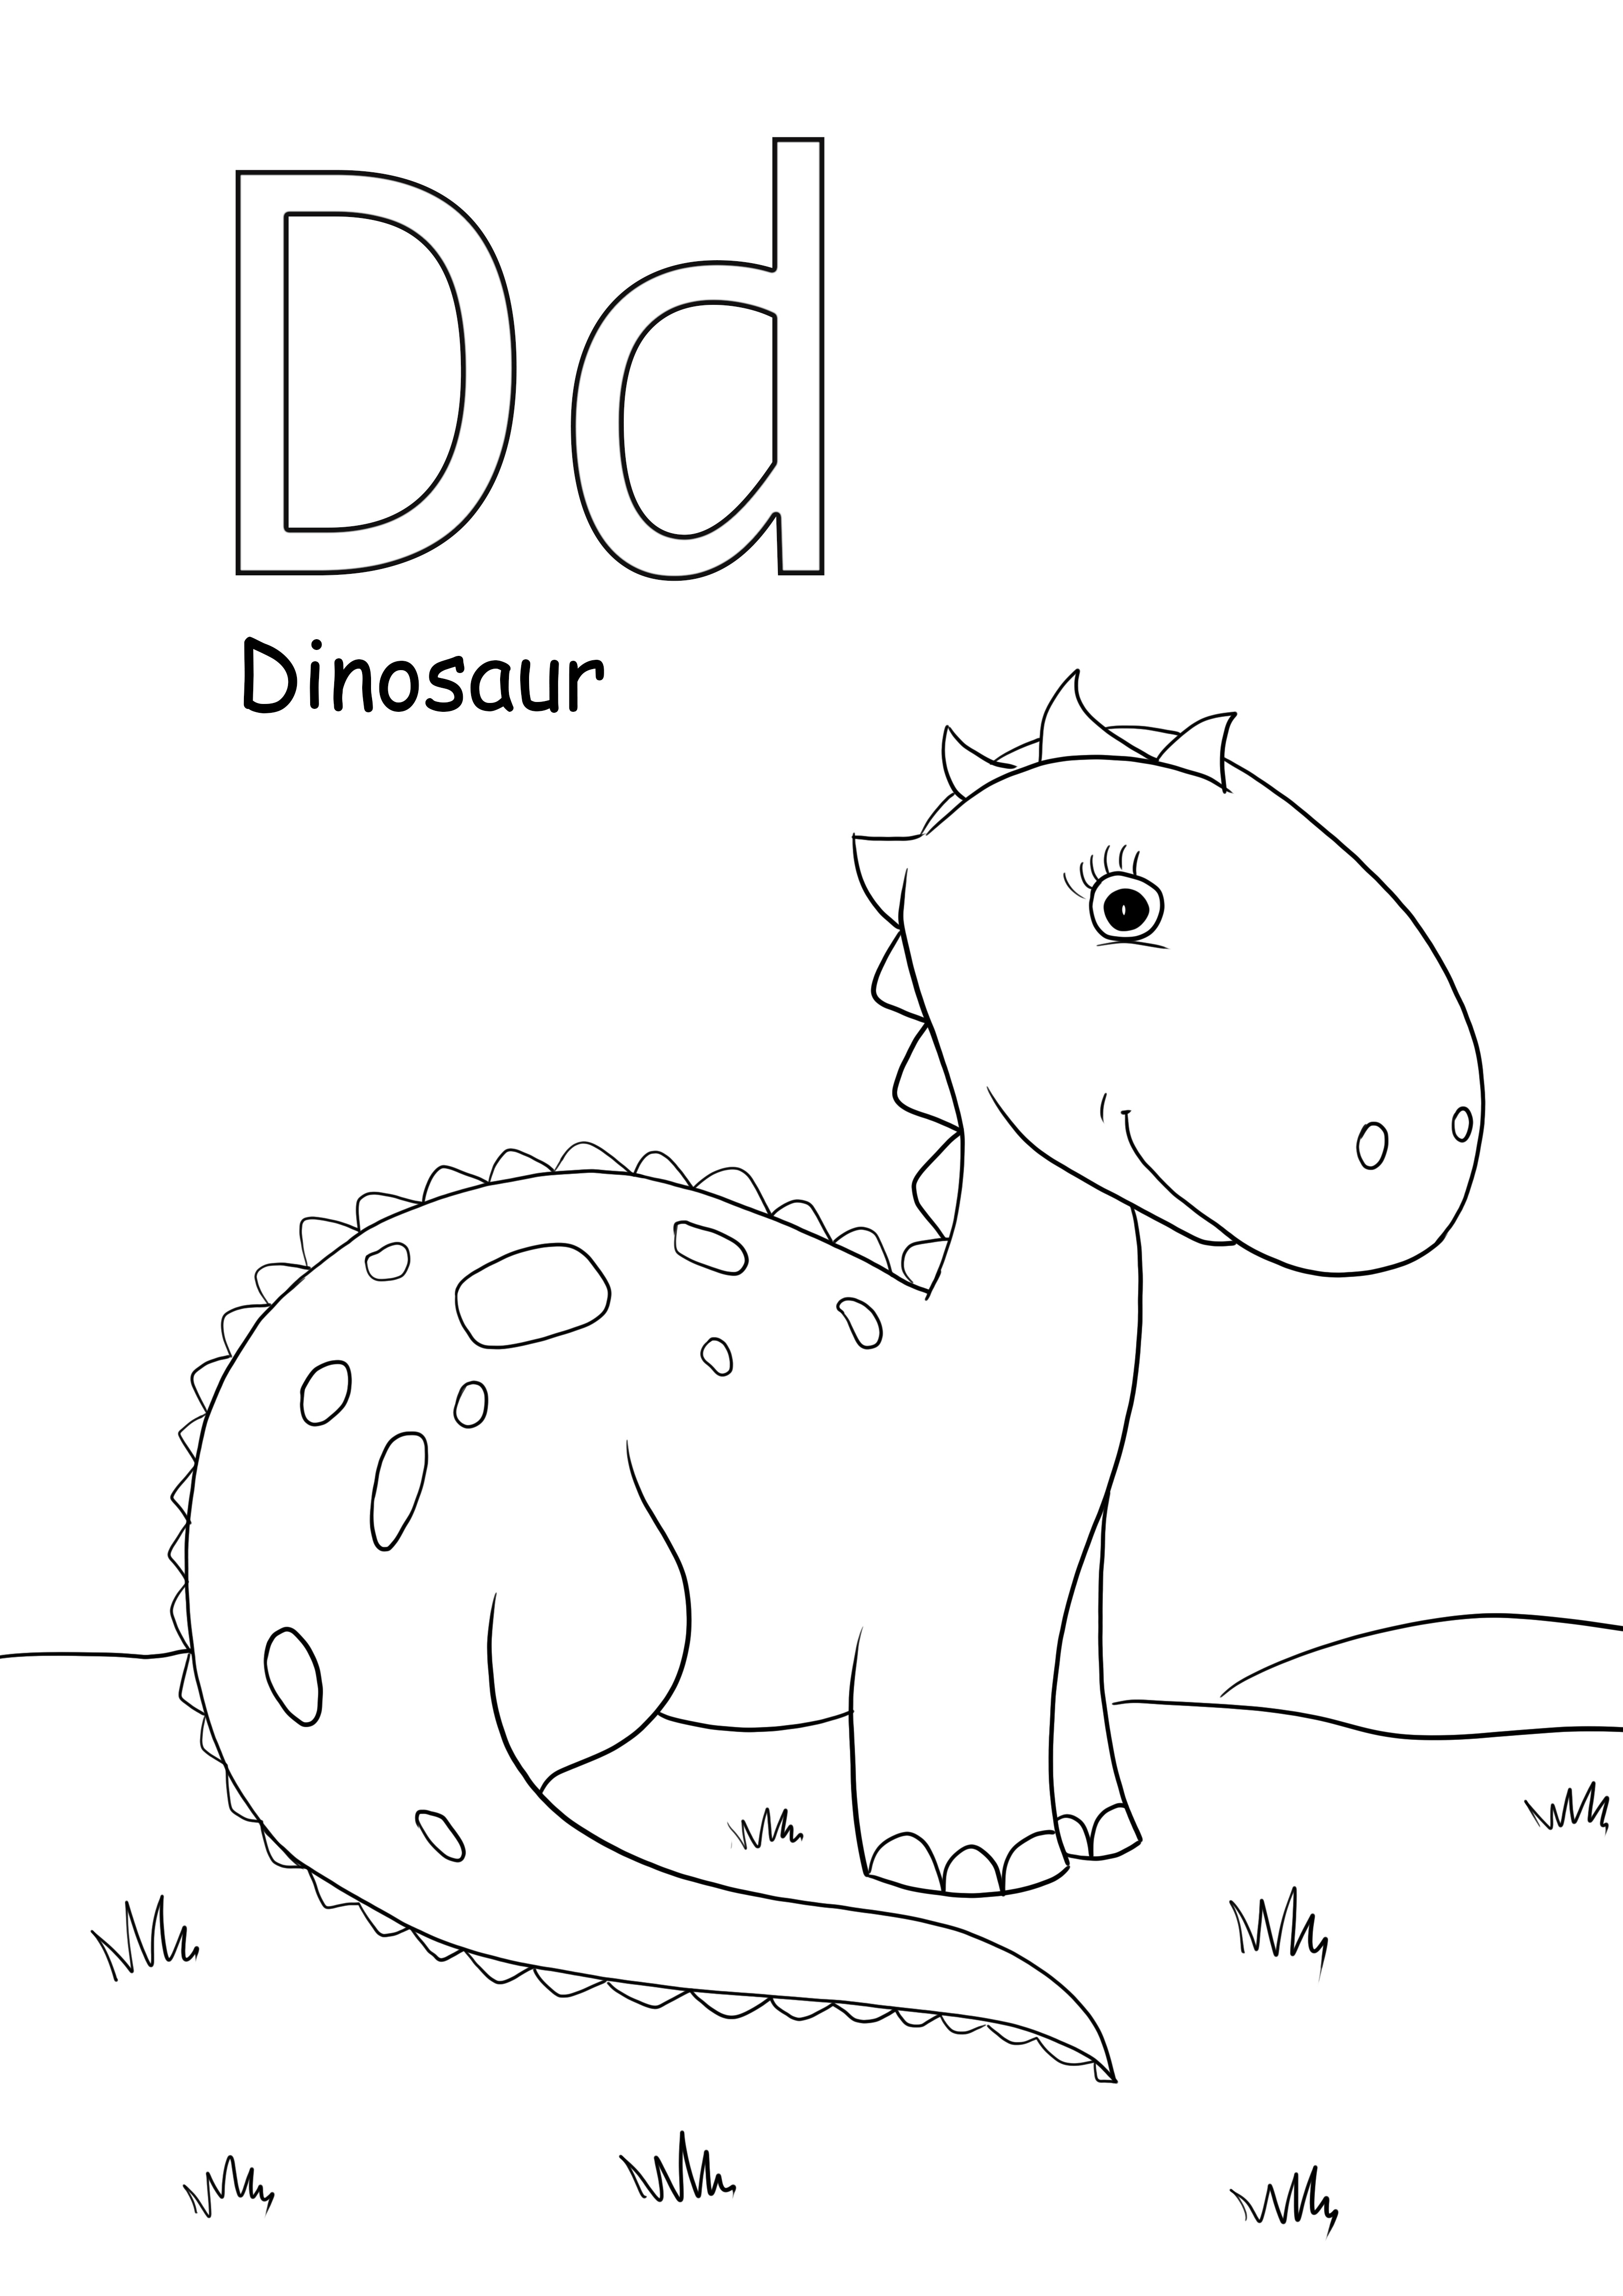 dは恐竜の着色画像用で、印刷は自由です